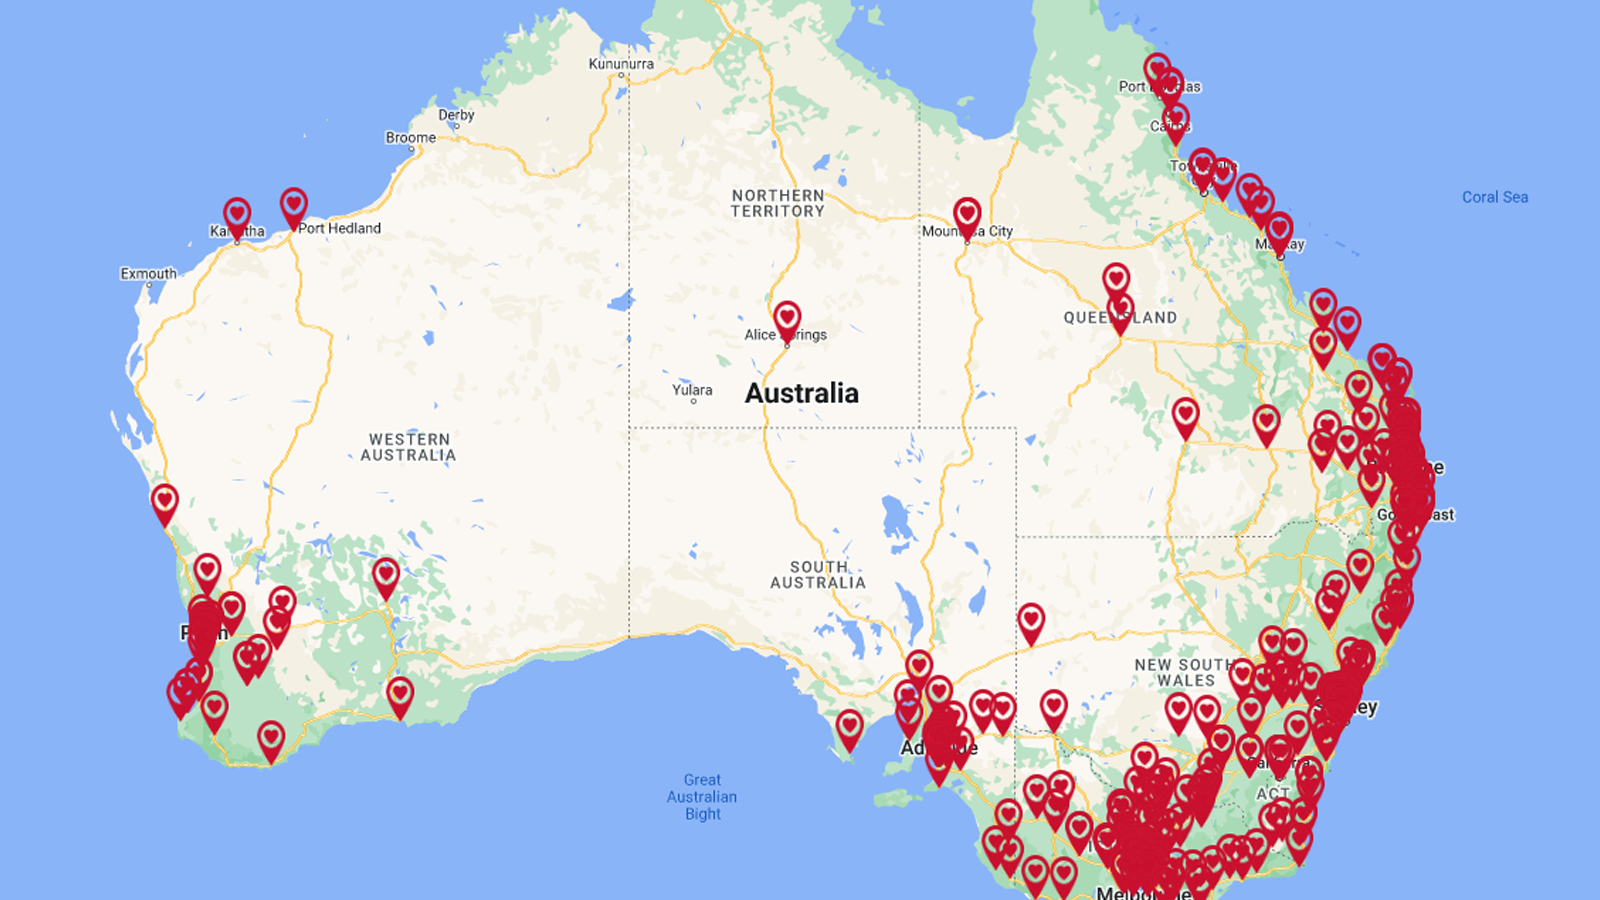 Map of Australia with cardiac rehab programs highlights by heart icon